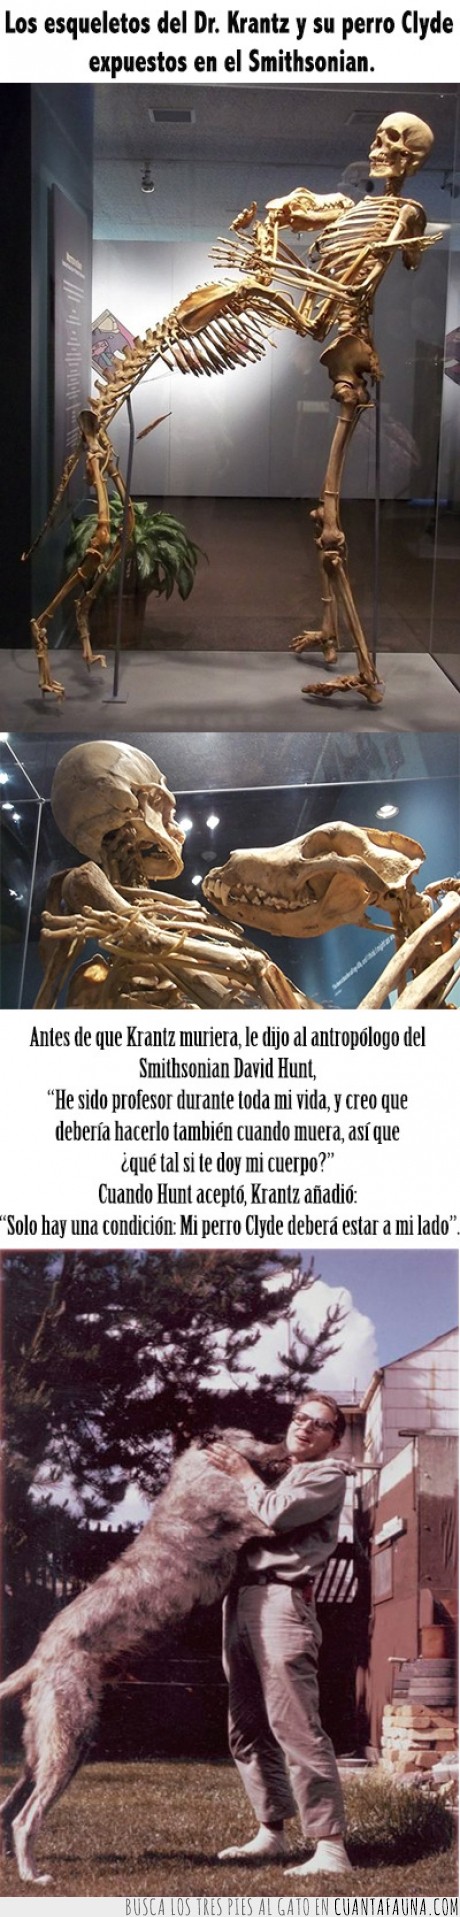 smithsonian,esqueleto,perro,dr.krantz